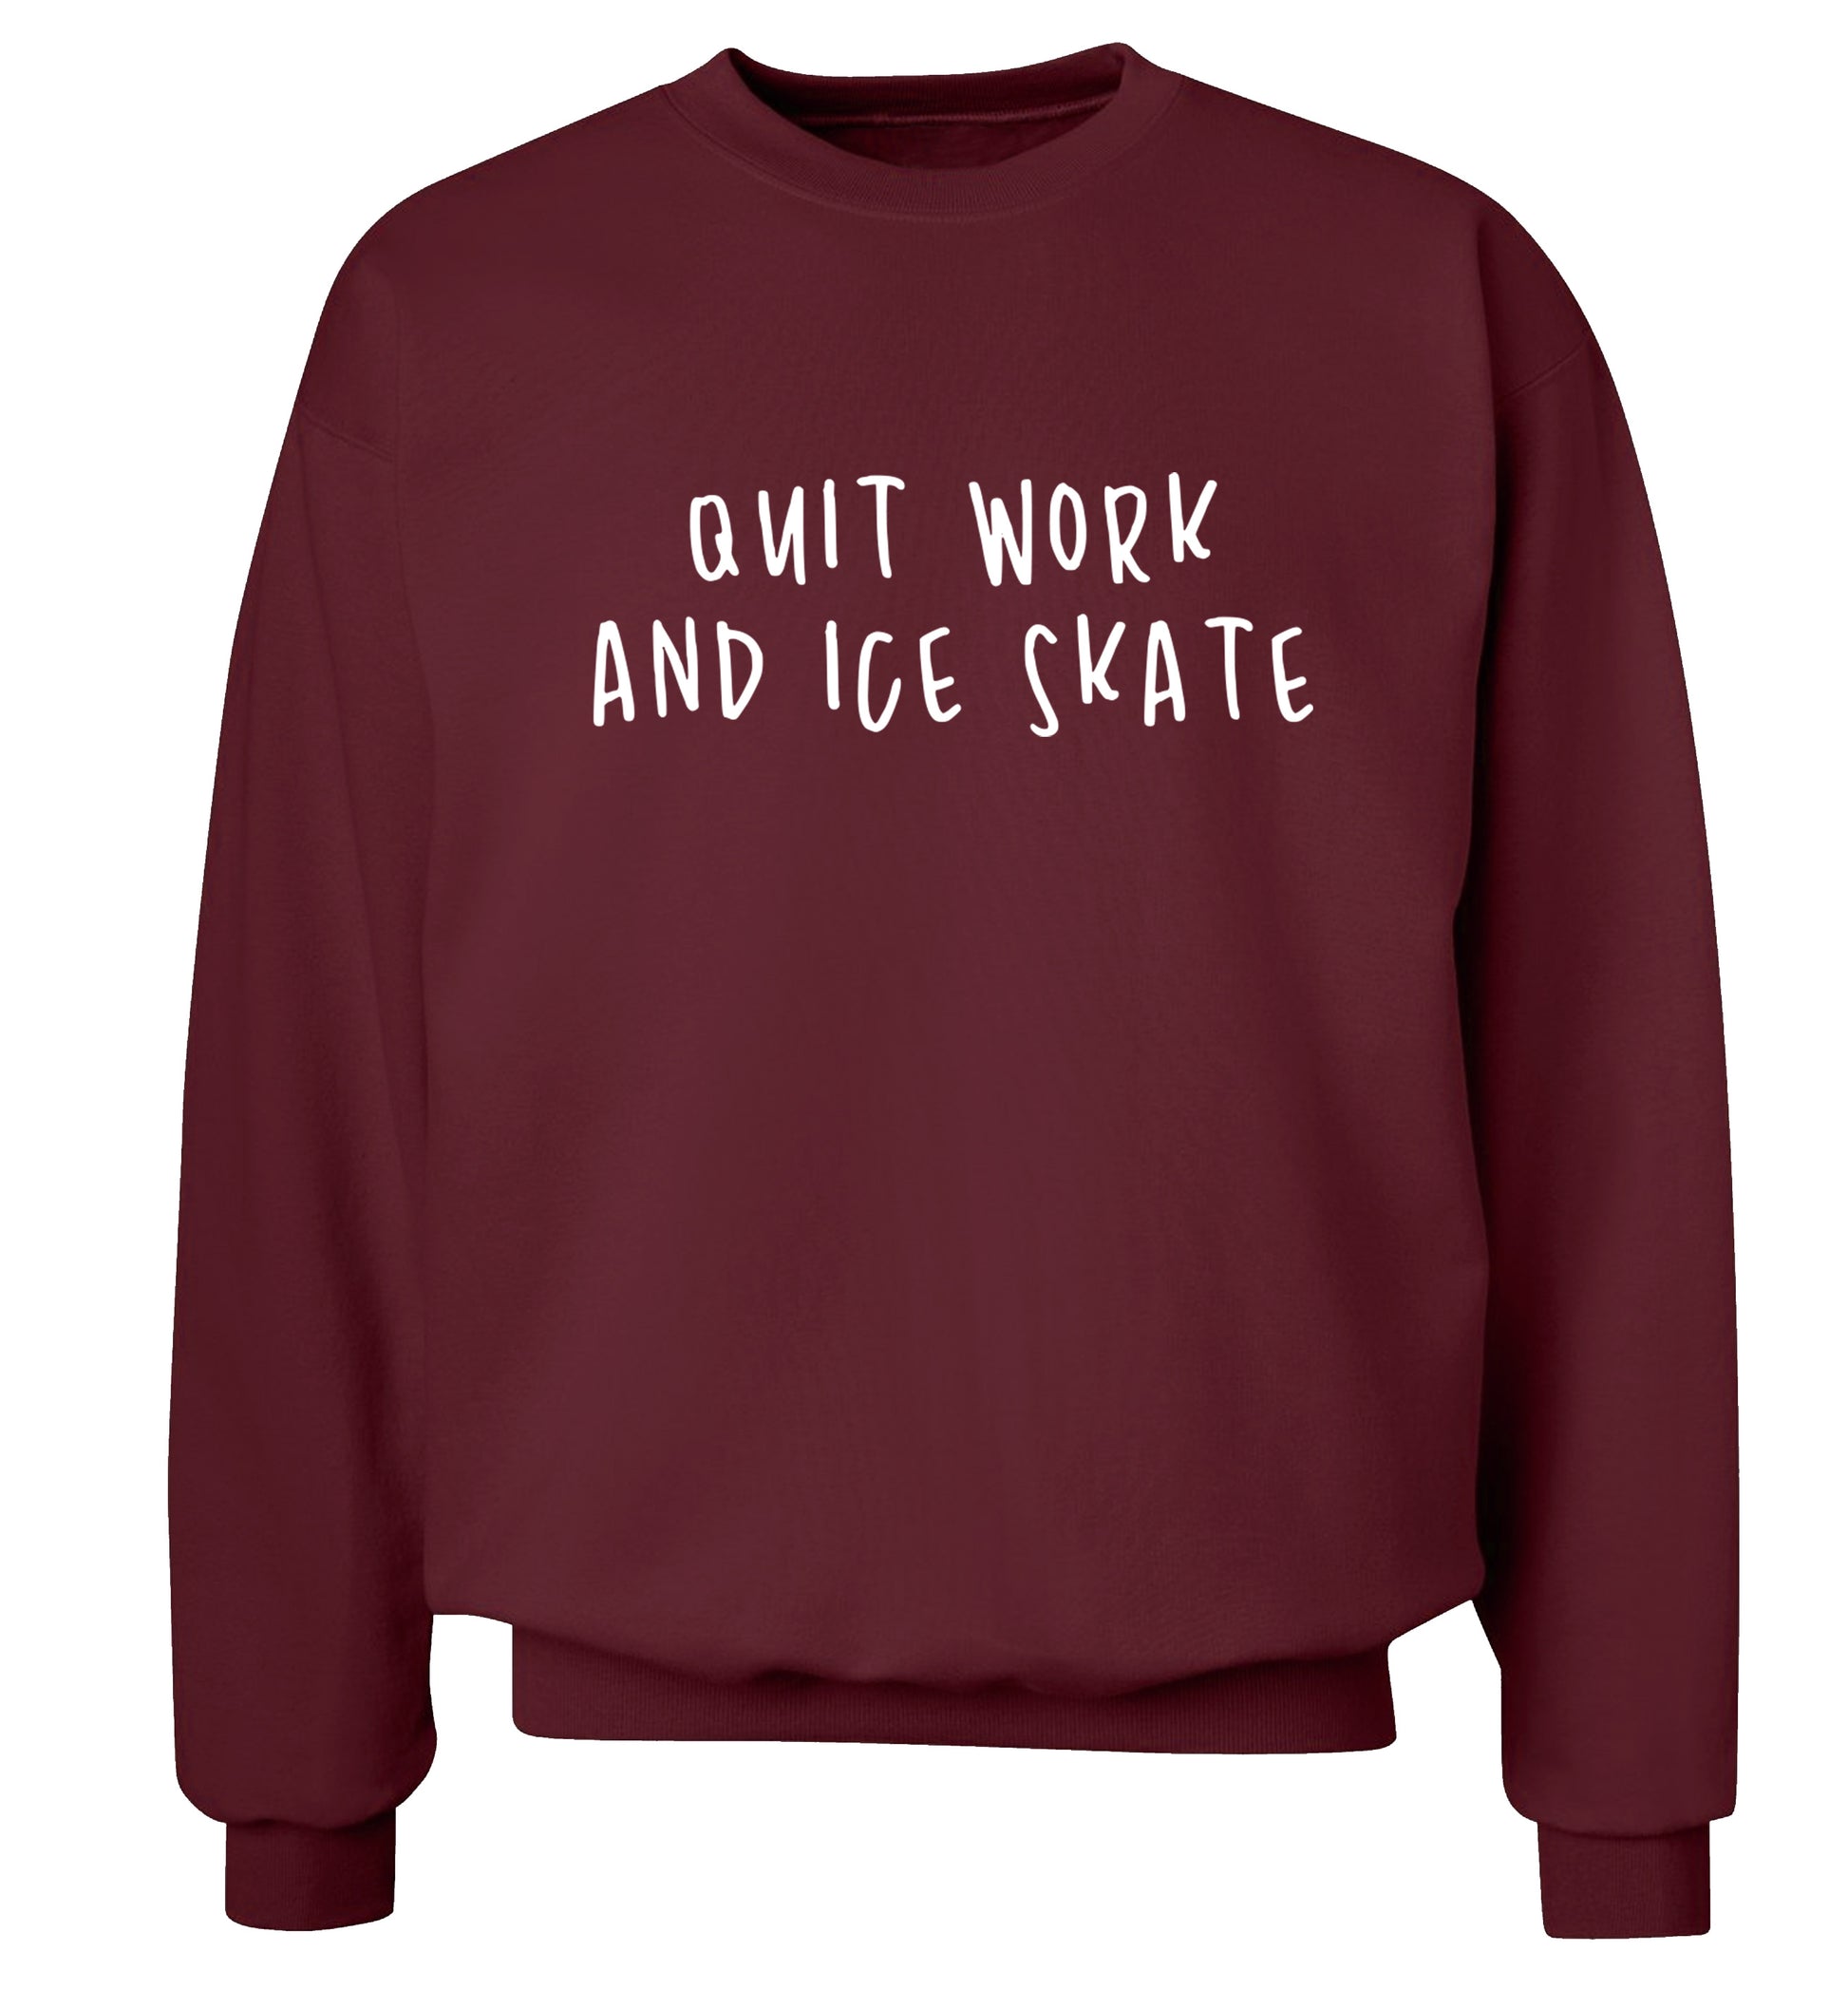 Quit work ice skate Adult's unisexmaroon Sweater 2XL